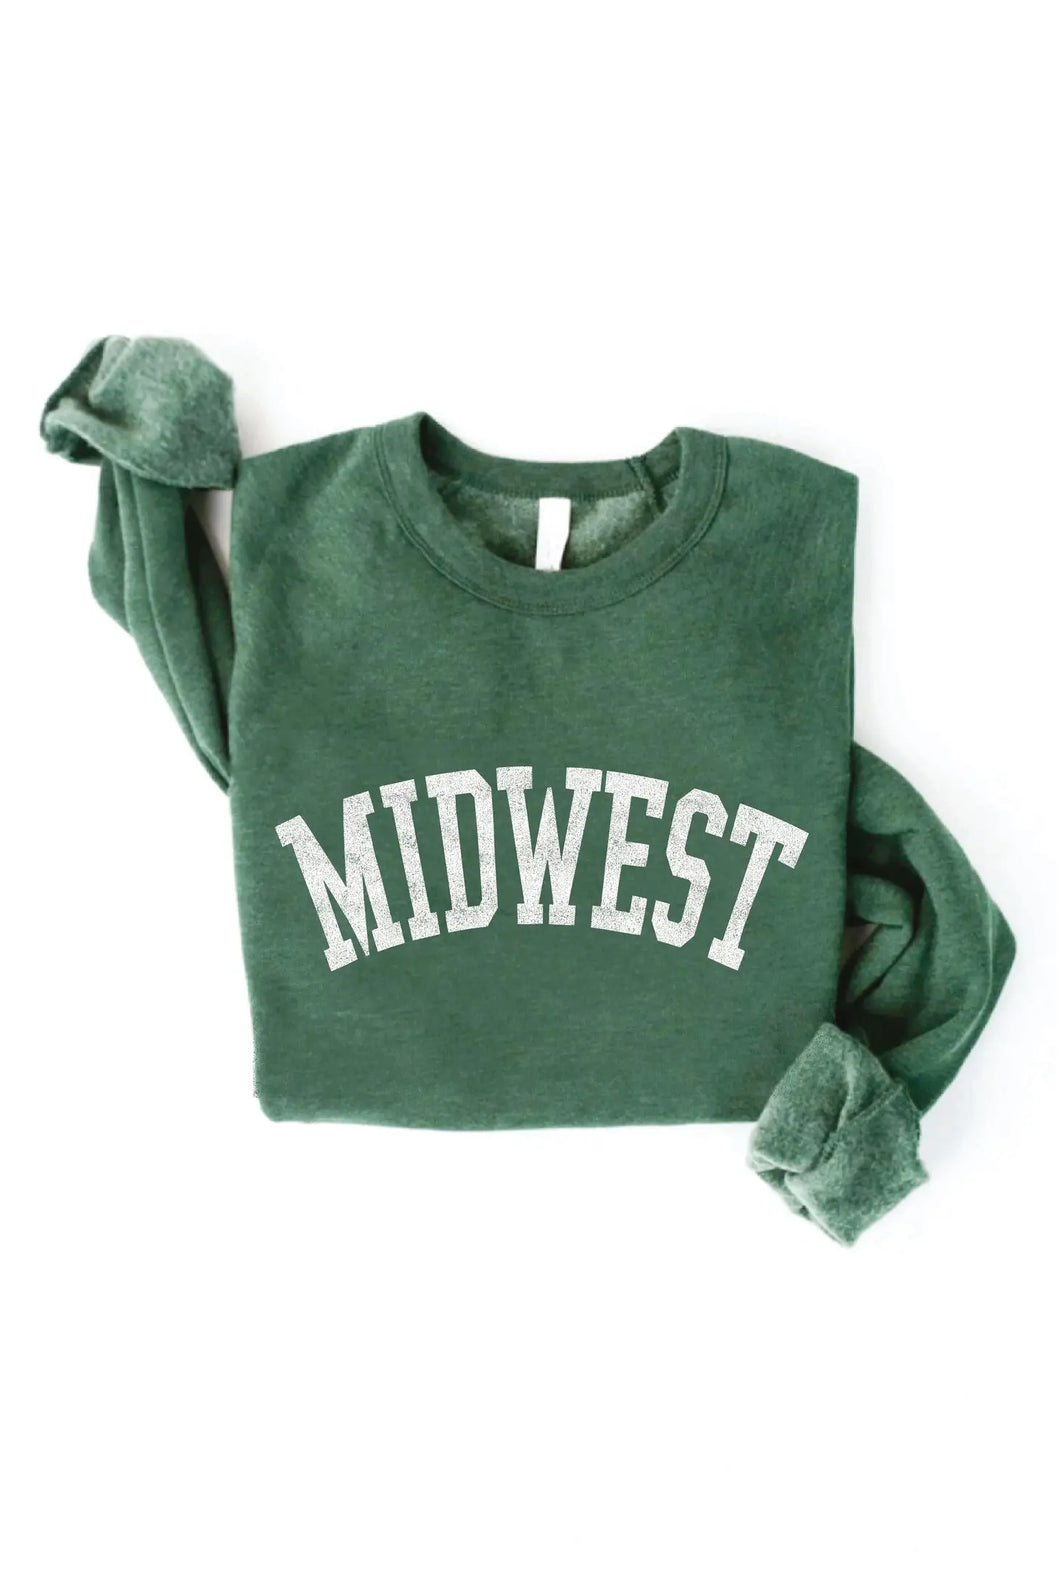 Midwest Graphic Sweatshirt- Heather Forest